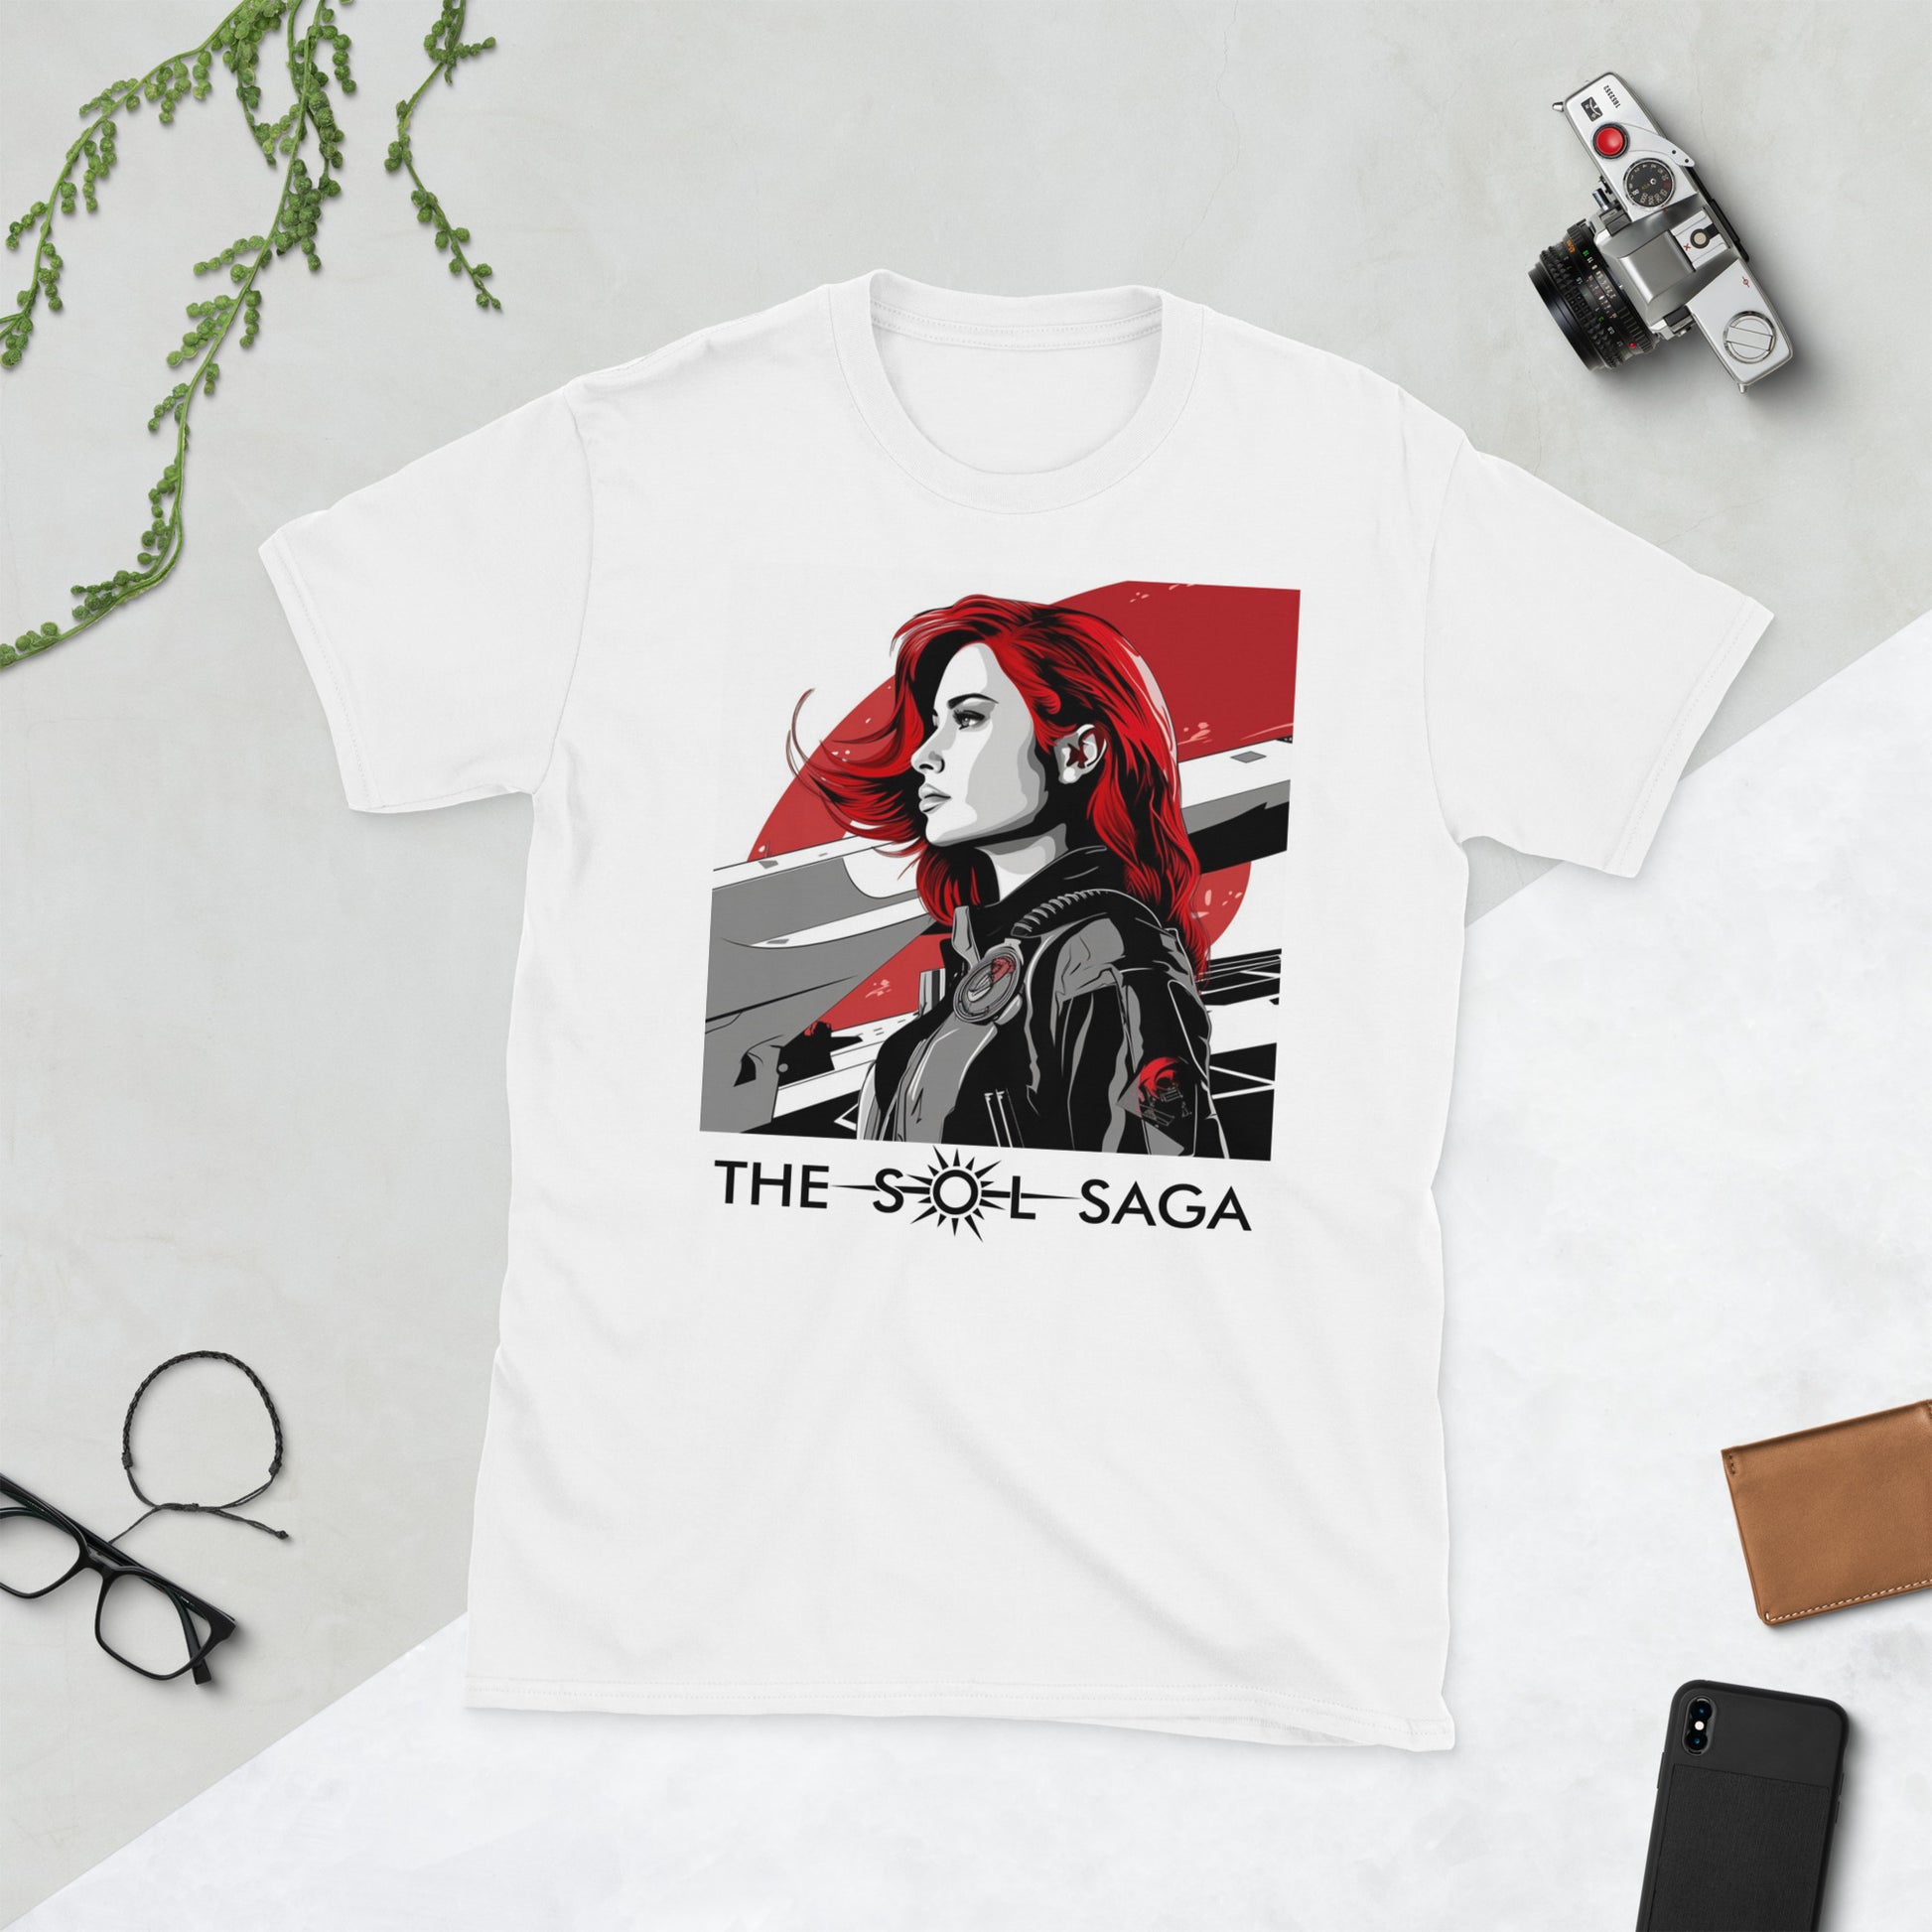 The Sol Saga - Sol T-Shirt Short-Sleeve Shop – Colt The - Saga Unisex